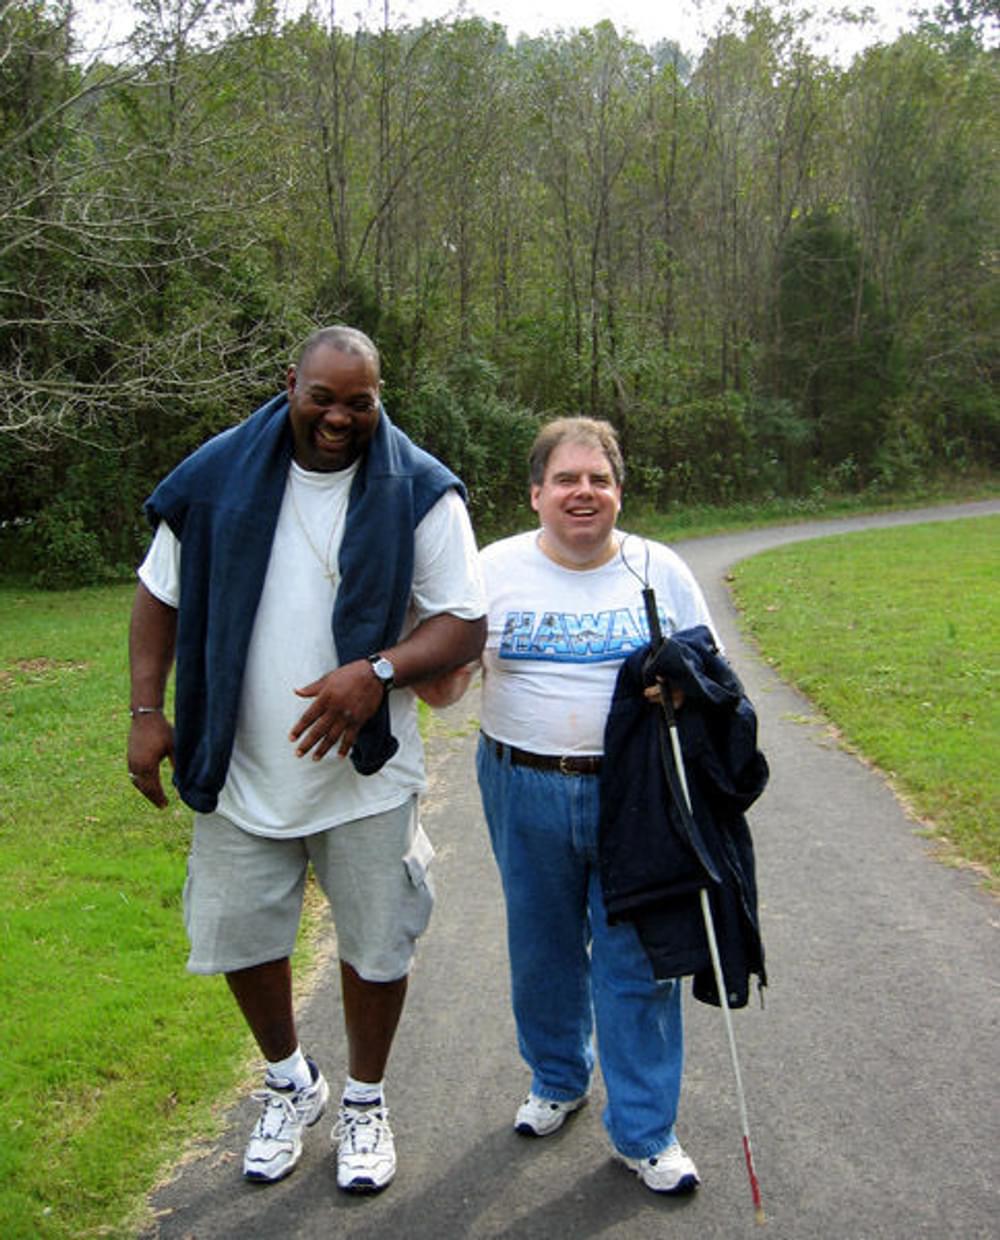  Walking partners on the Rivanna Trail in Charlottesville, Virginia